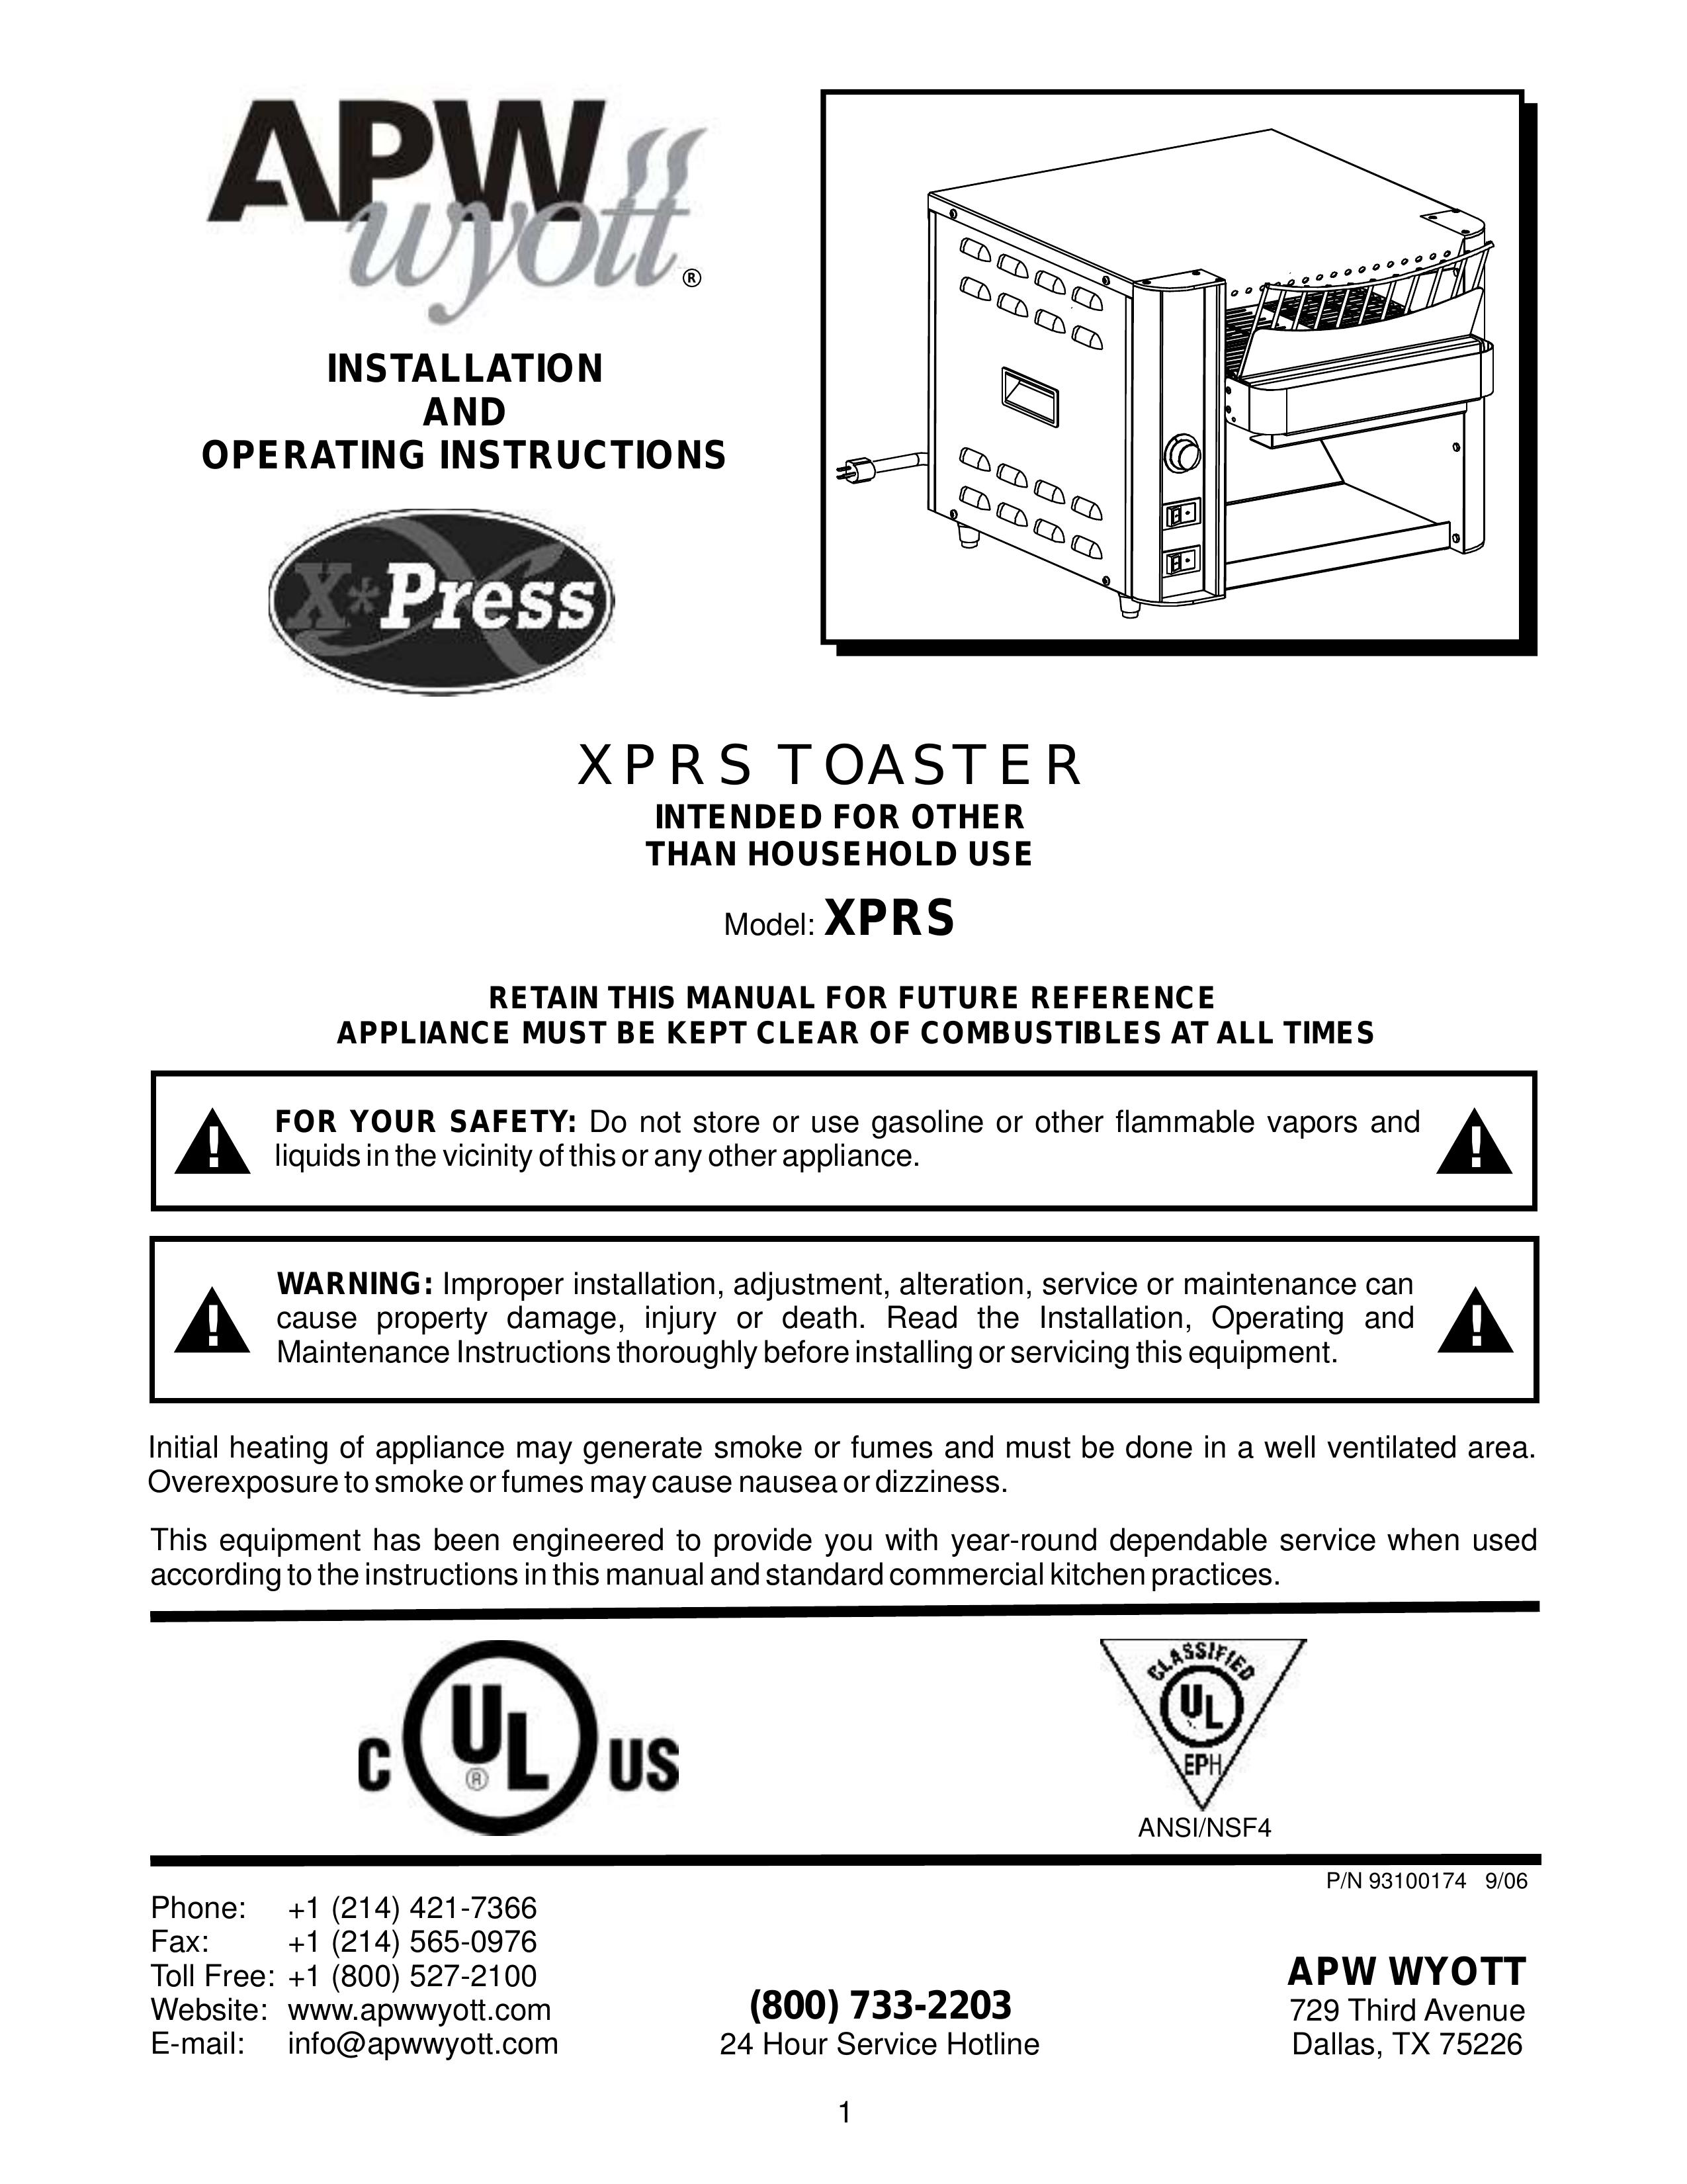 APW Wyott XPRS Toaster User Manual